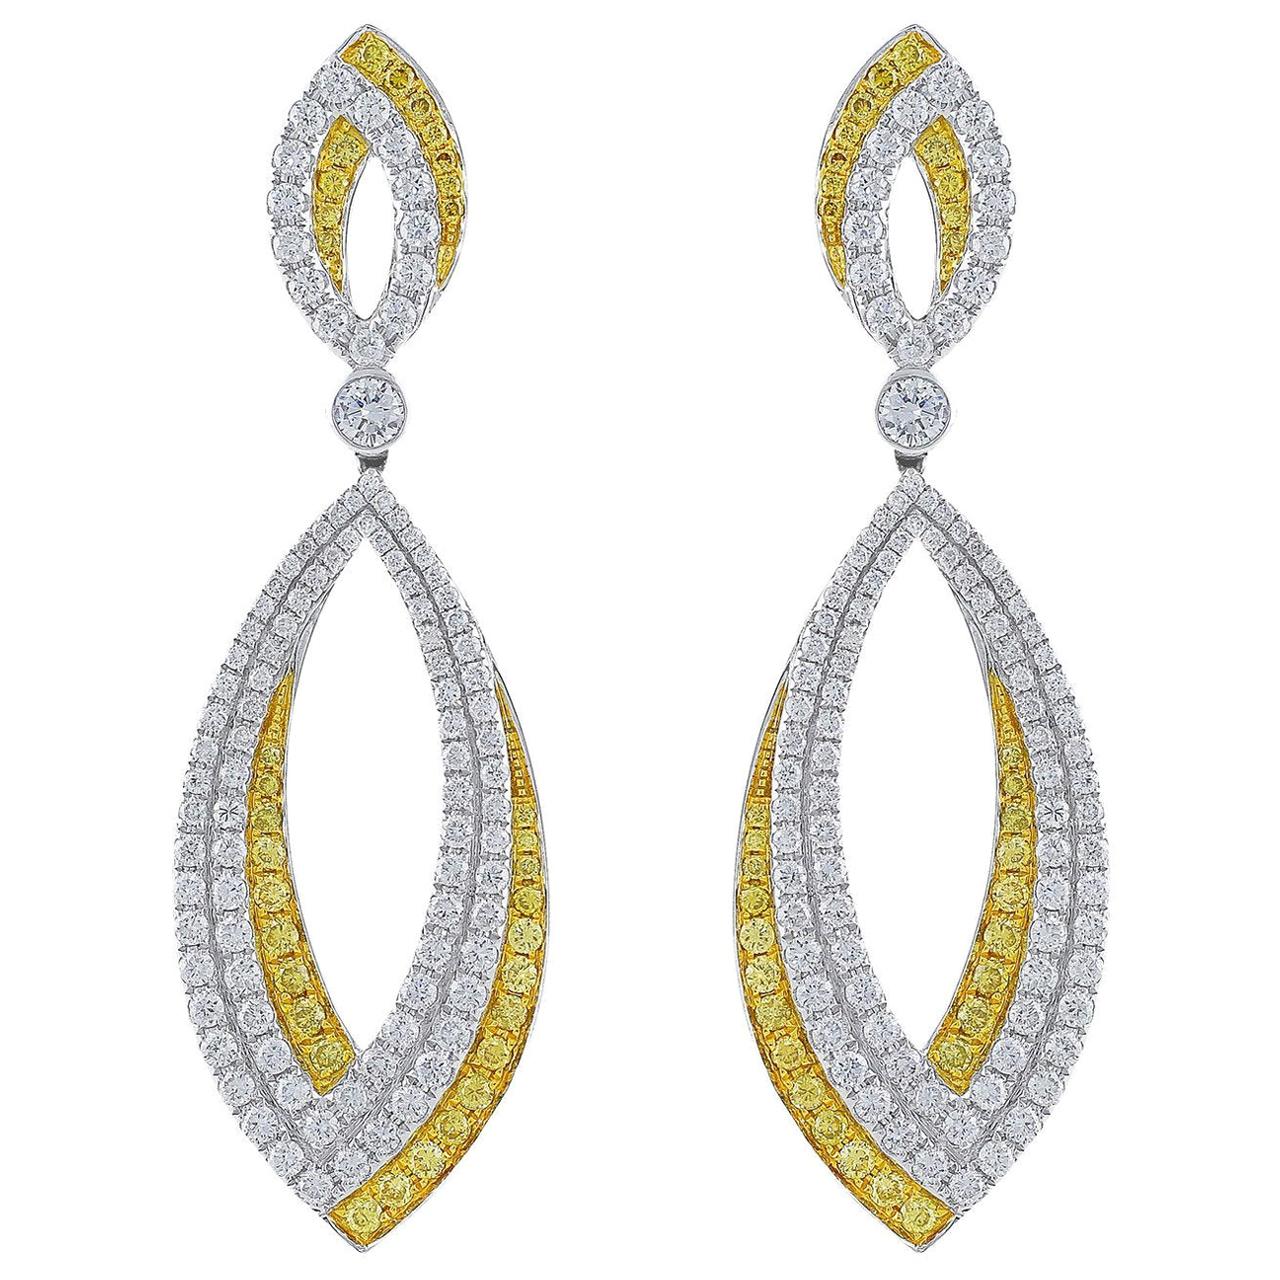 18 Karat Gold Yellow and White Diamond Oval Drop Earrings